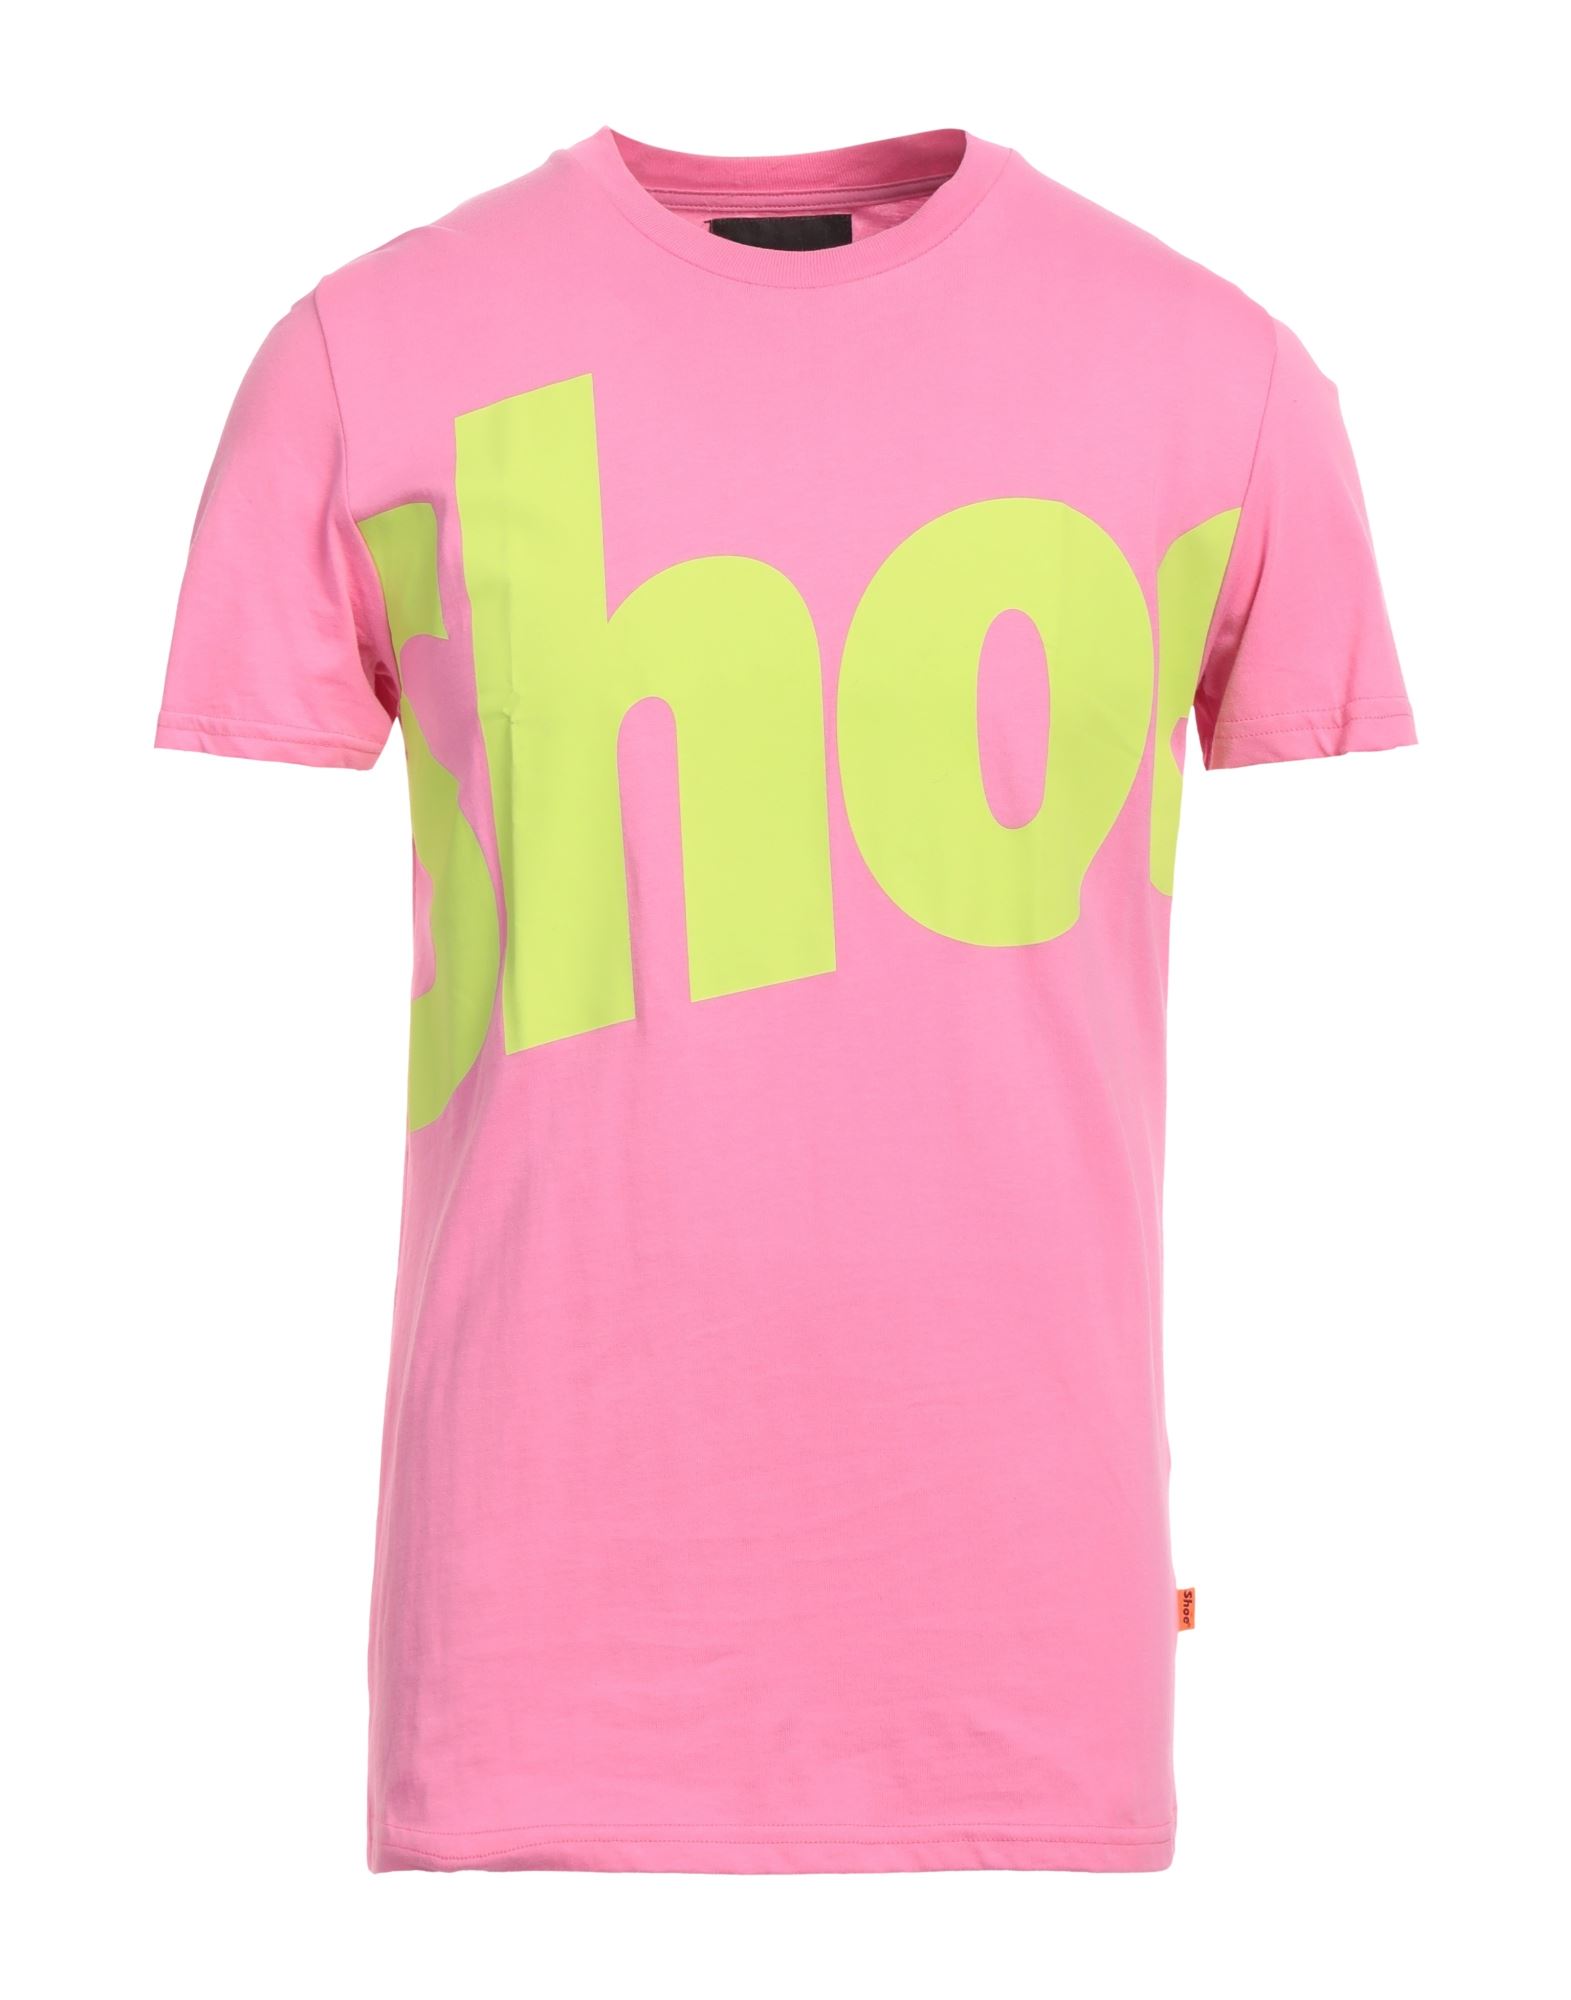 Shoe® Shoe Man T-shirt Pink Size S Cotton